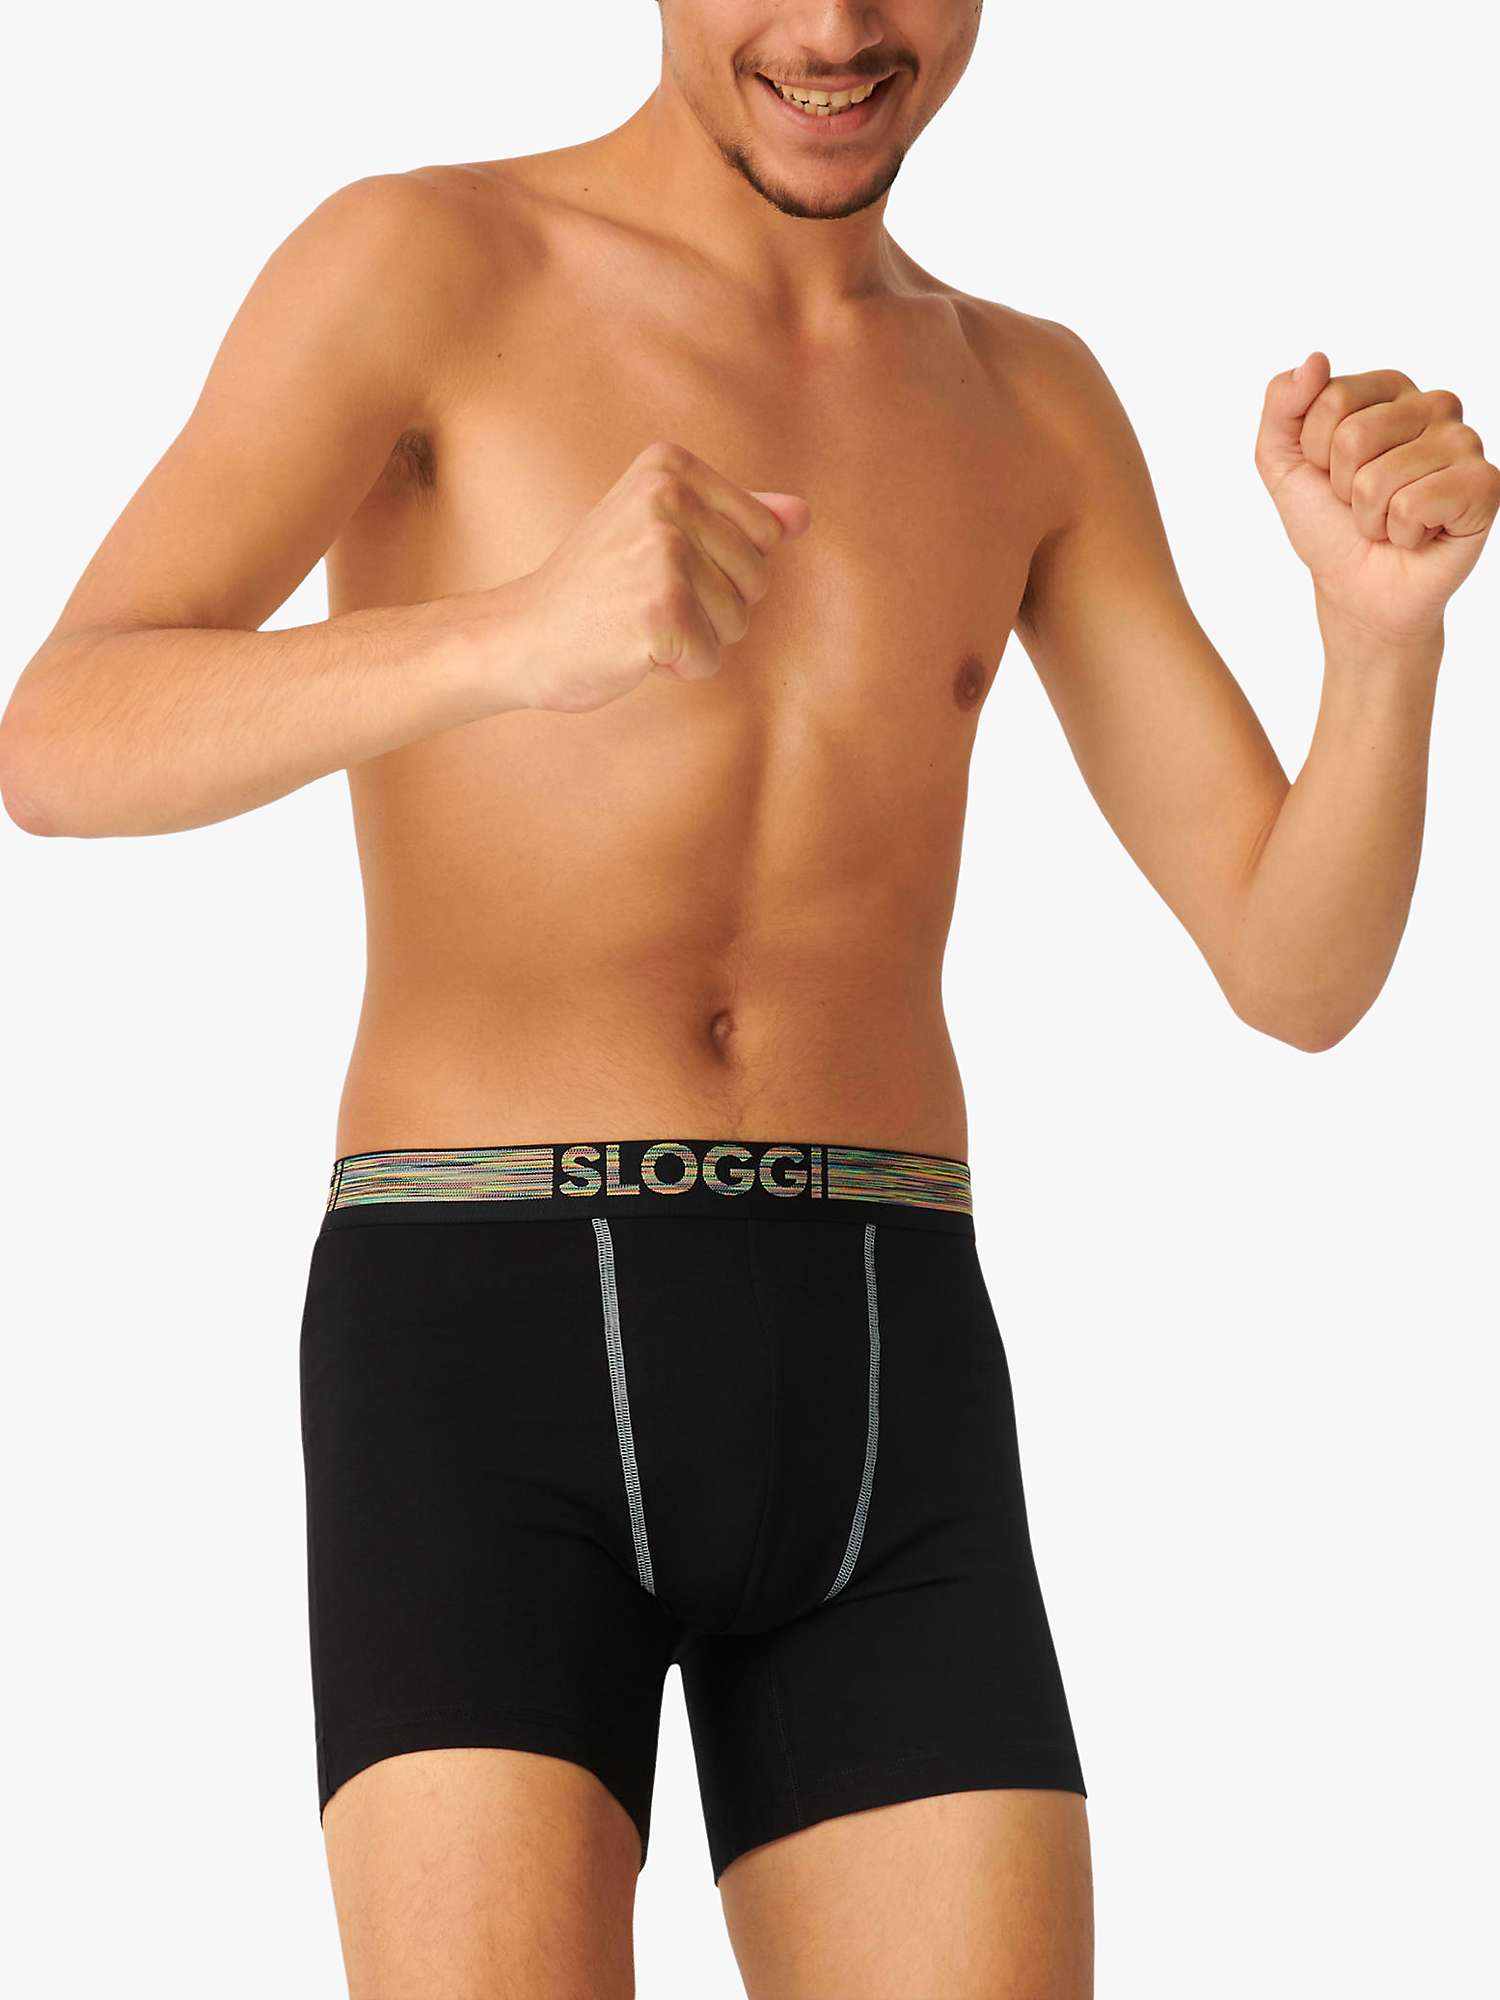 Buy sloggi GO ABC Natural Cotton Stretch Hipster Trunks, Pack of 2, Black Online at johnlewis.com